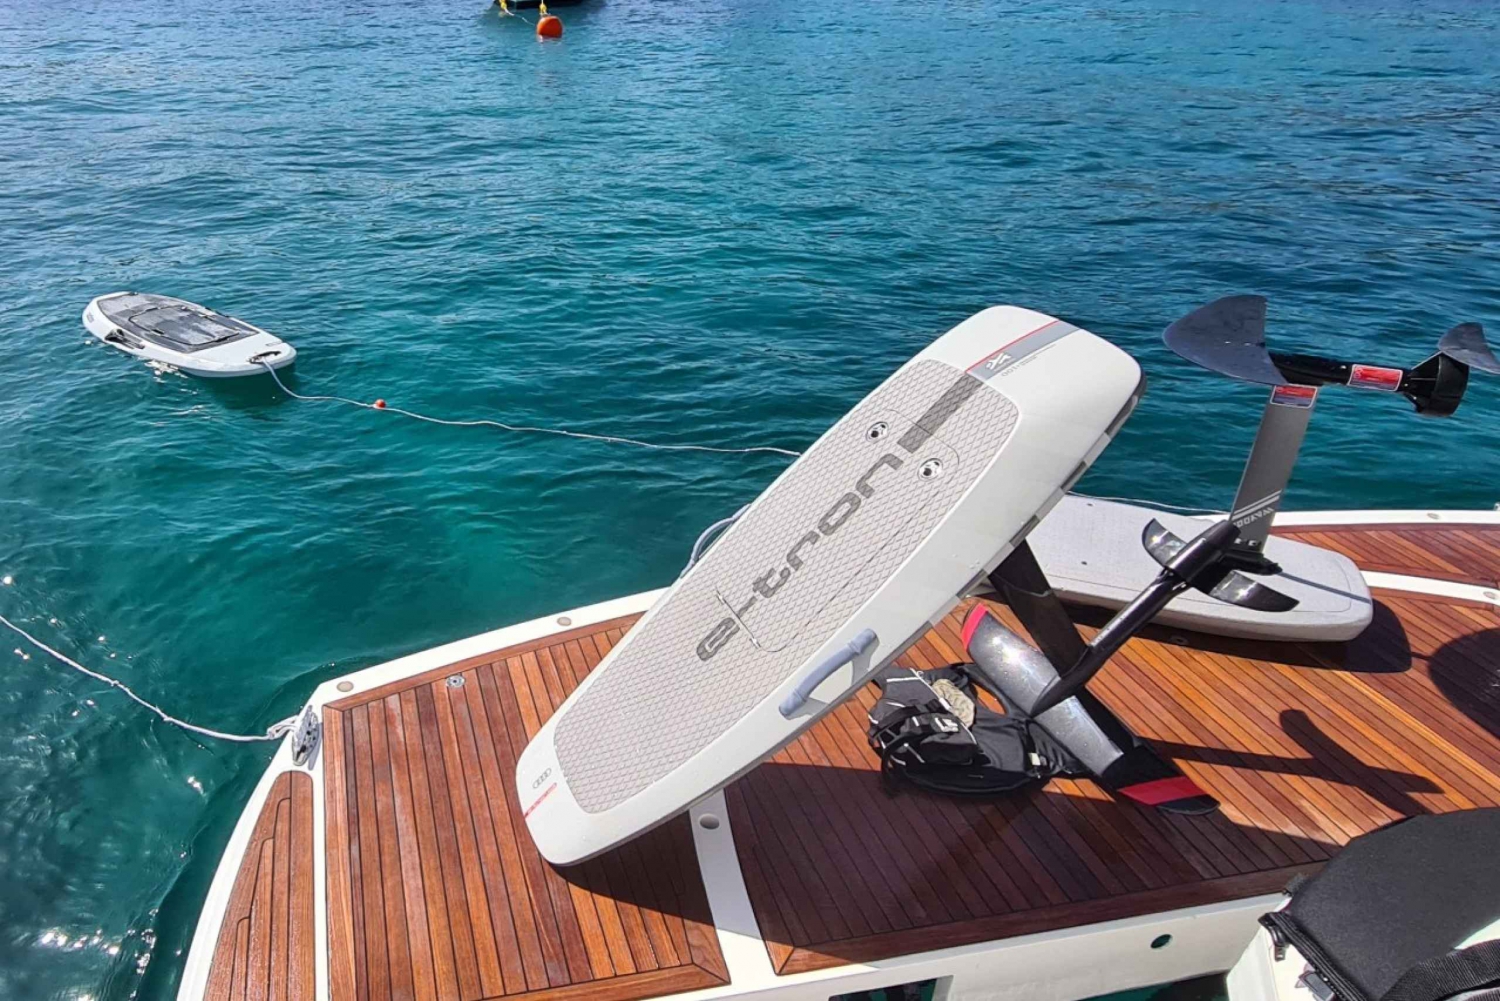 Palma: Yacht Sea Toy Adventure with E-Foil Board & Seabob